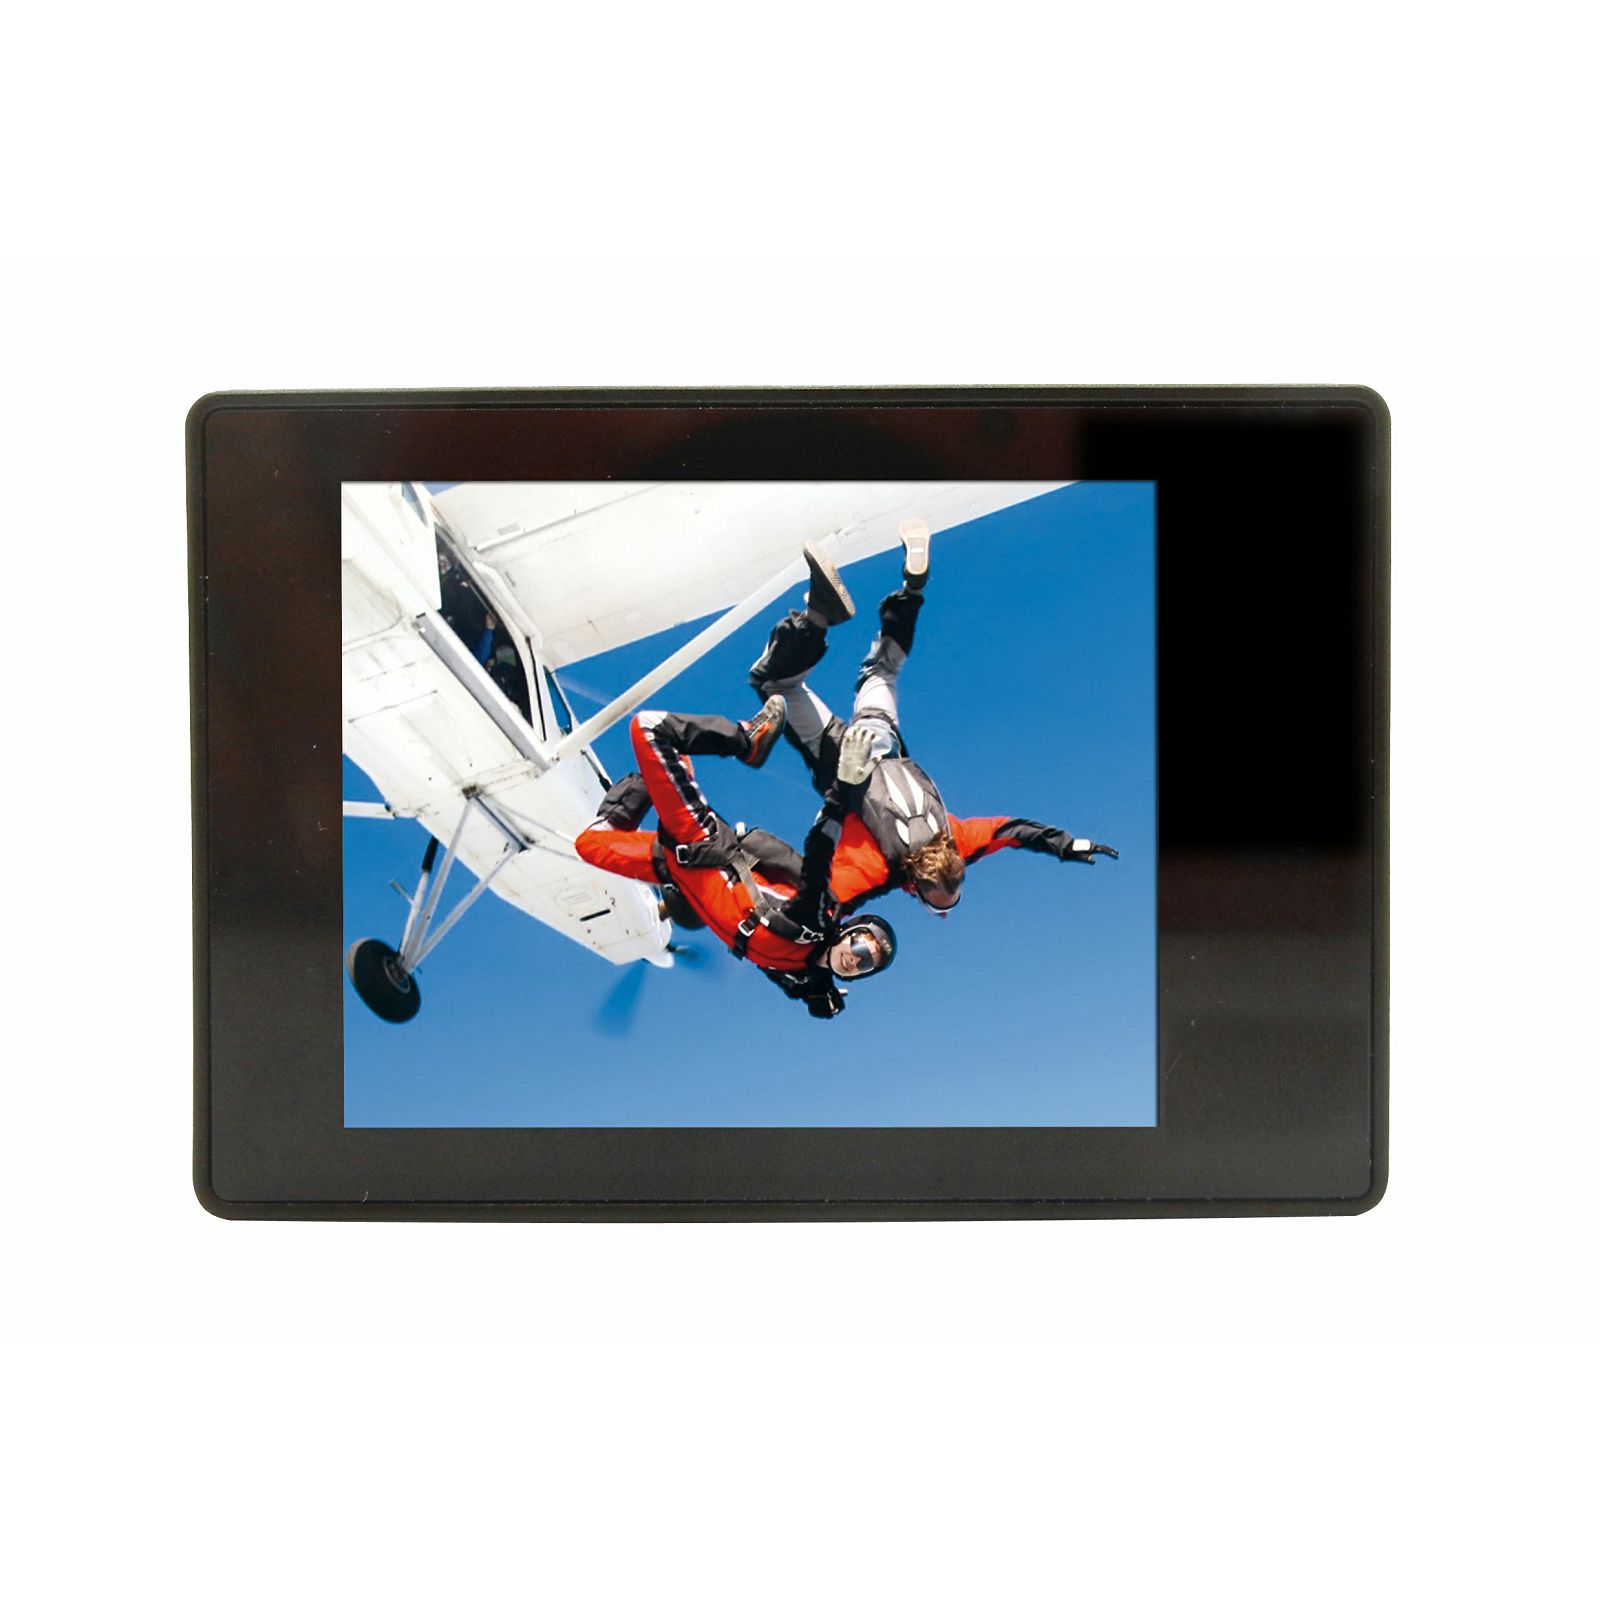 GoXtreme BlackHawk 4K Ultra HD Action Camera 4K 30fps 12.4MP WiFi Waterproof sportska akcijska kamera vodootporna do 60m (20132)